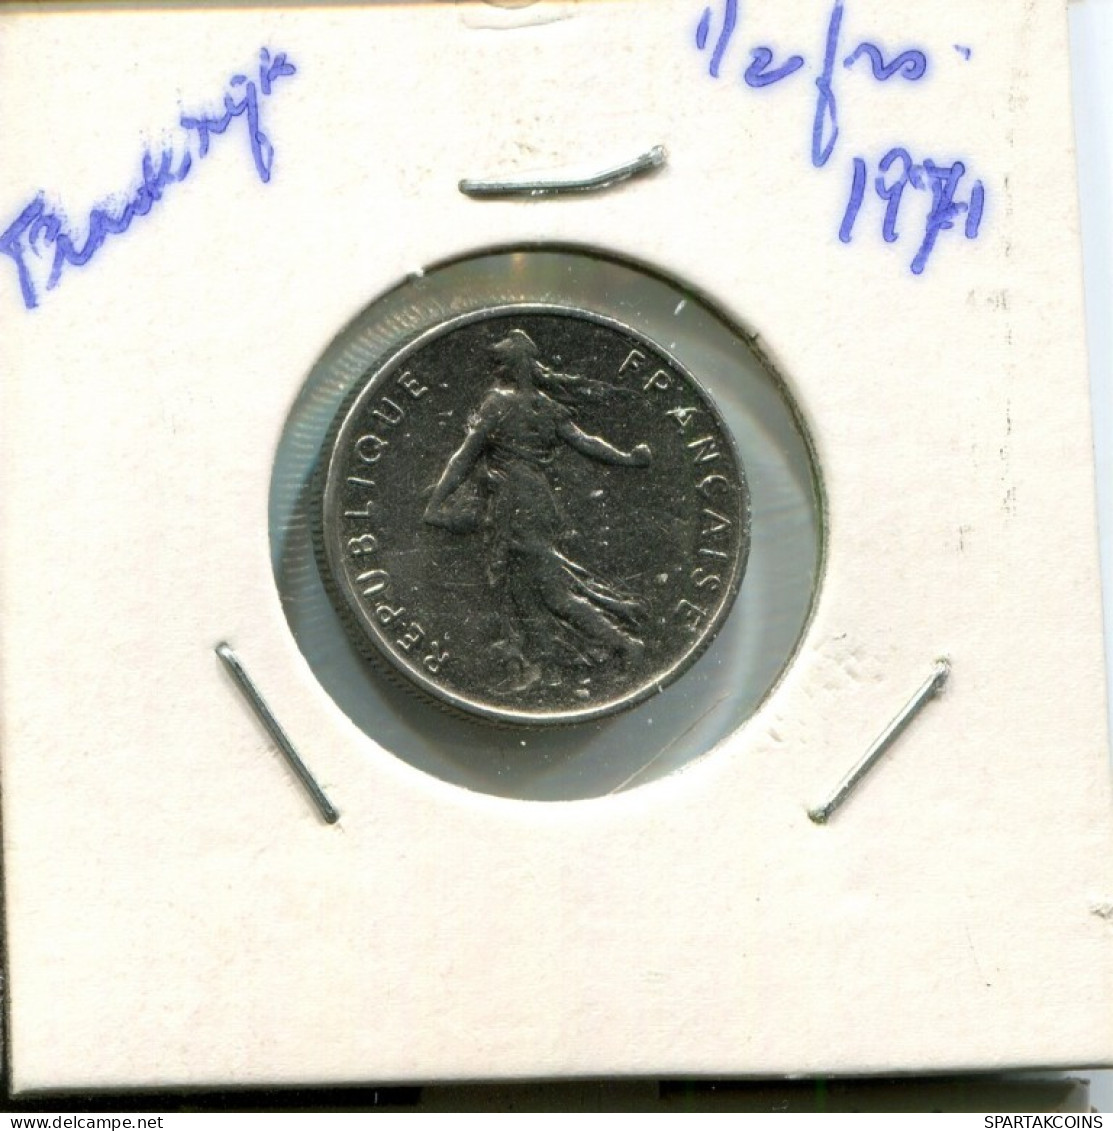 1/2 FRANC 1971 FRANCE Coin French Coin #AN913.U.A - 1/2 Franc